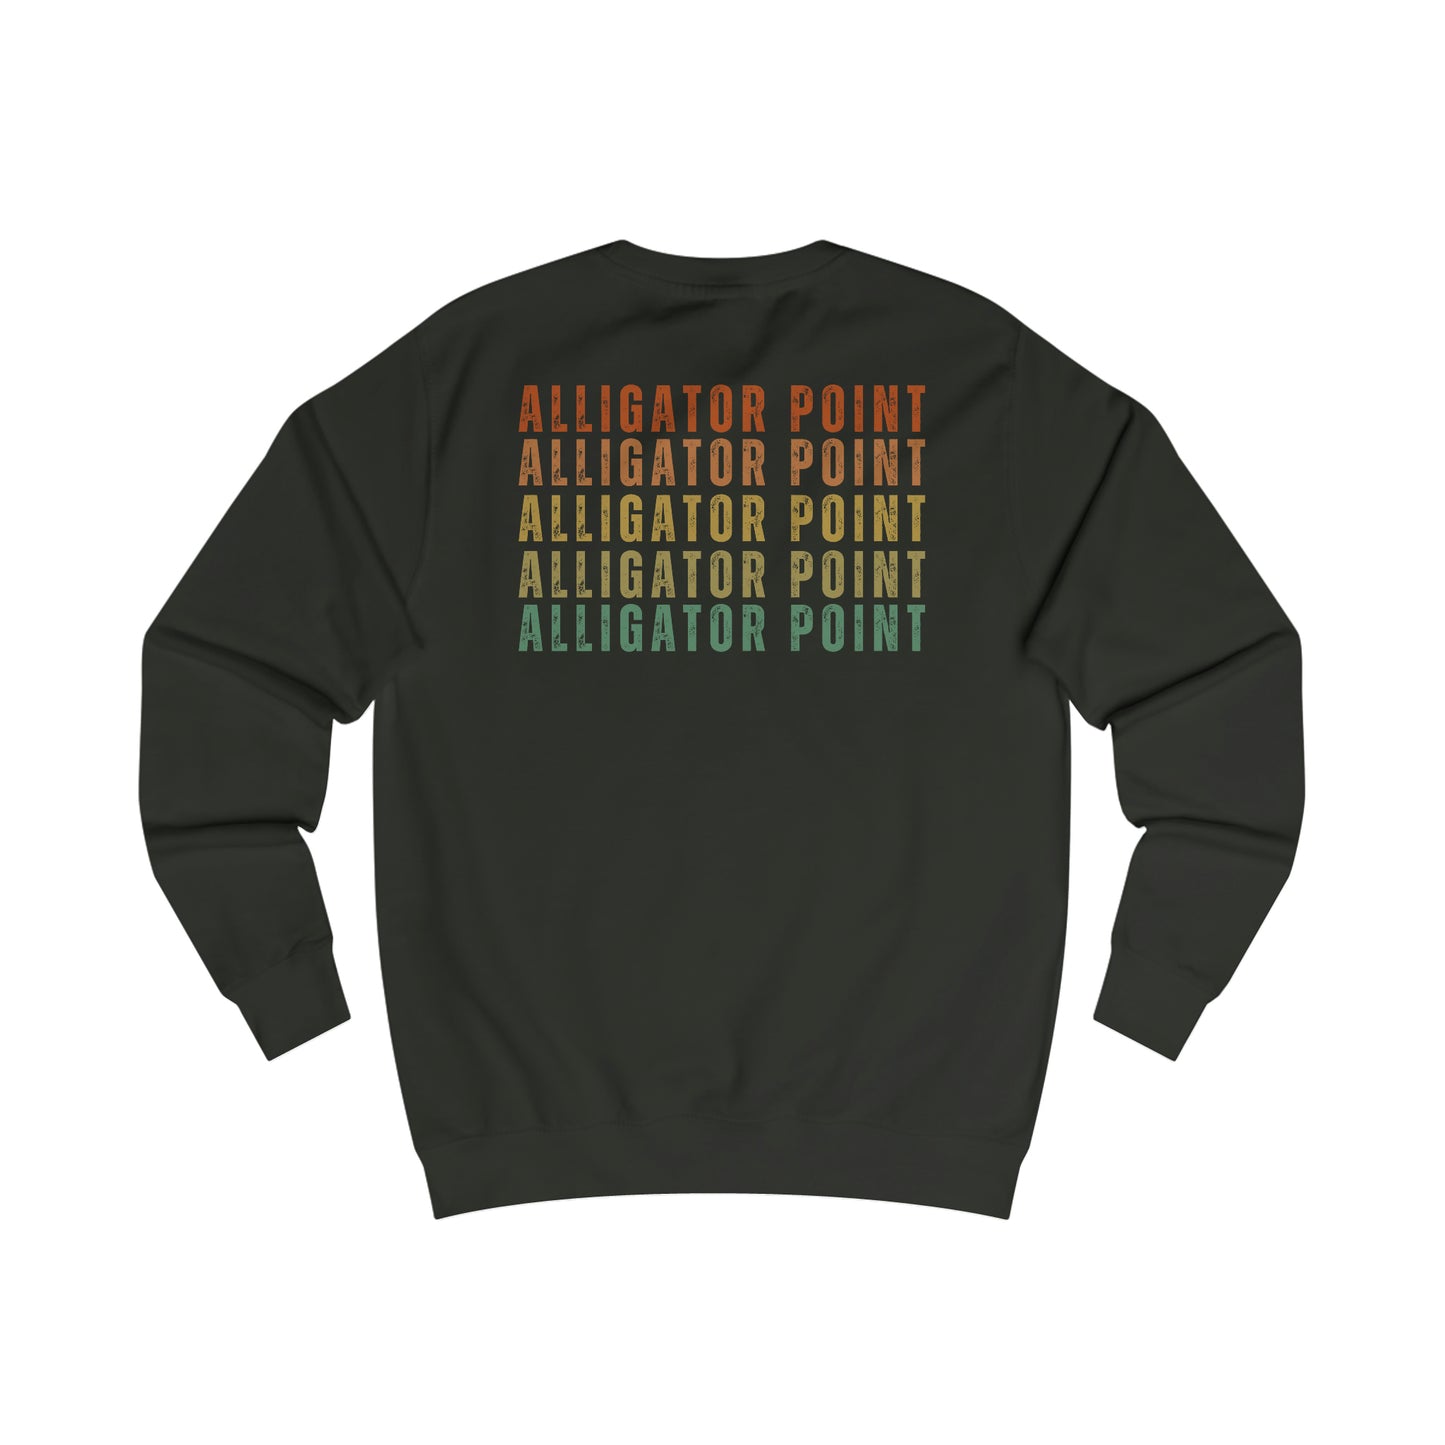 Alligator Point Repeat Sweatshirt (Hoodless)